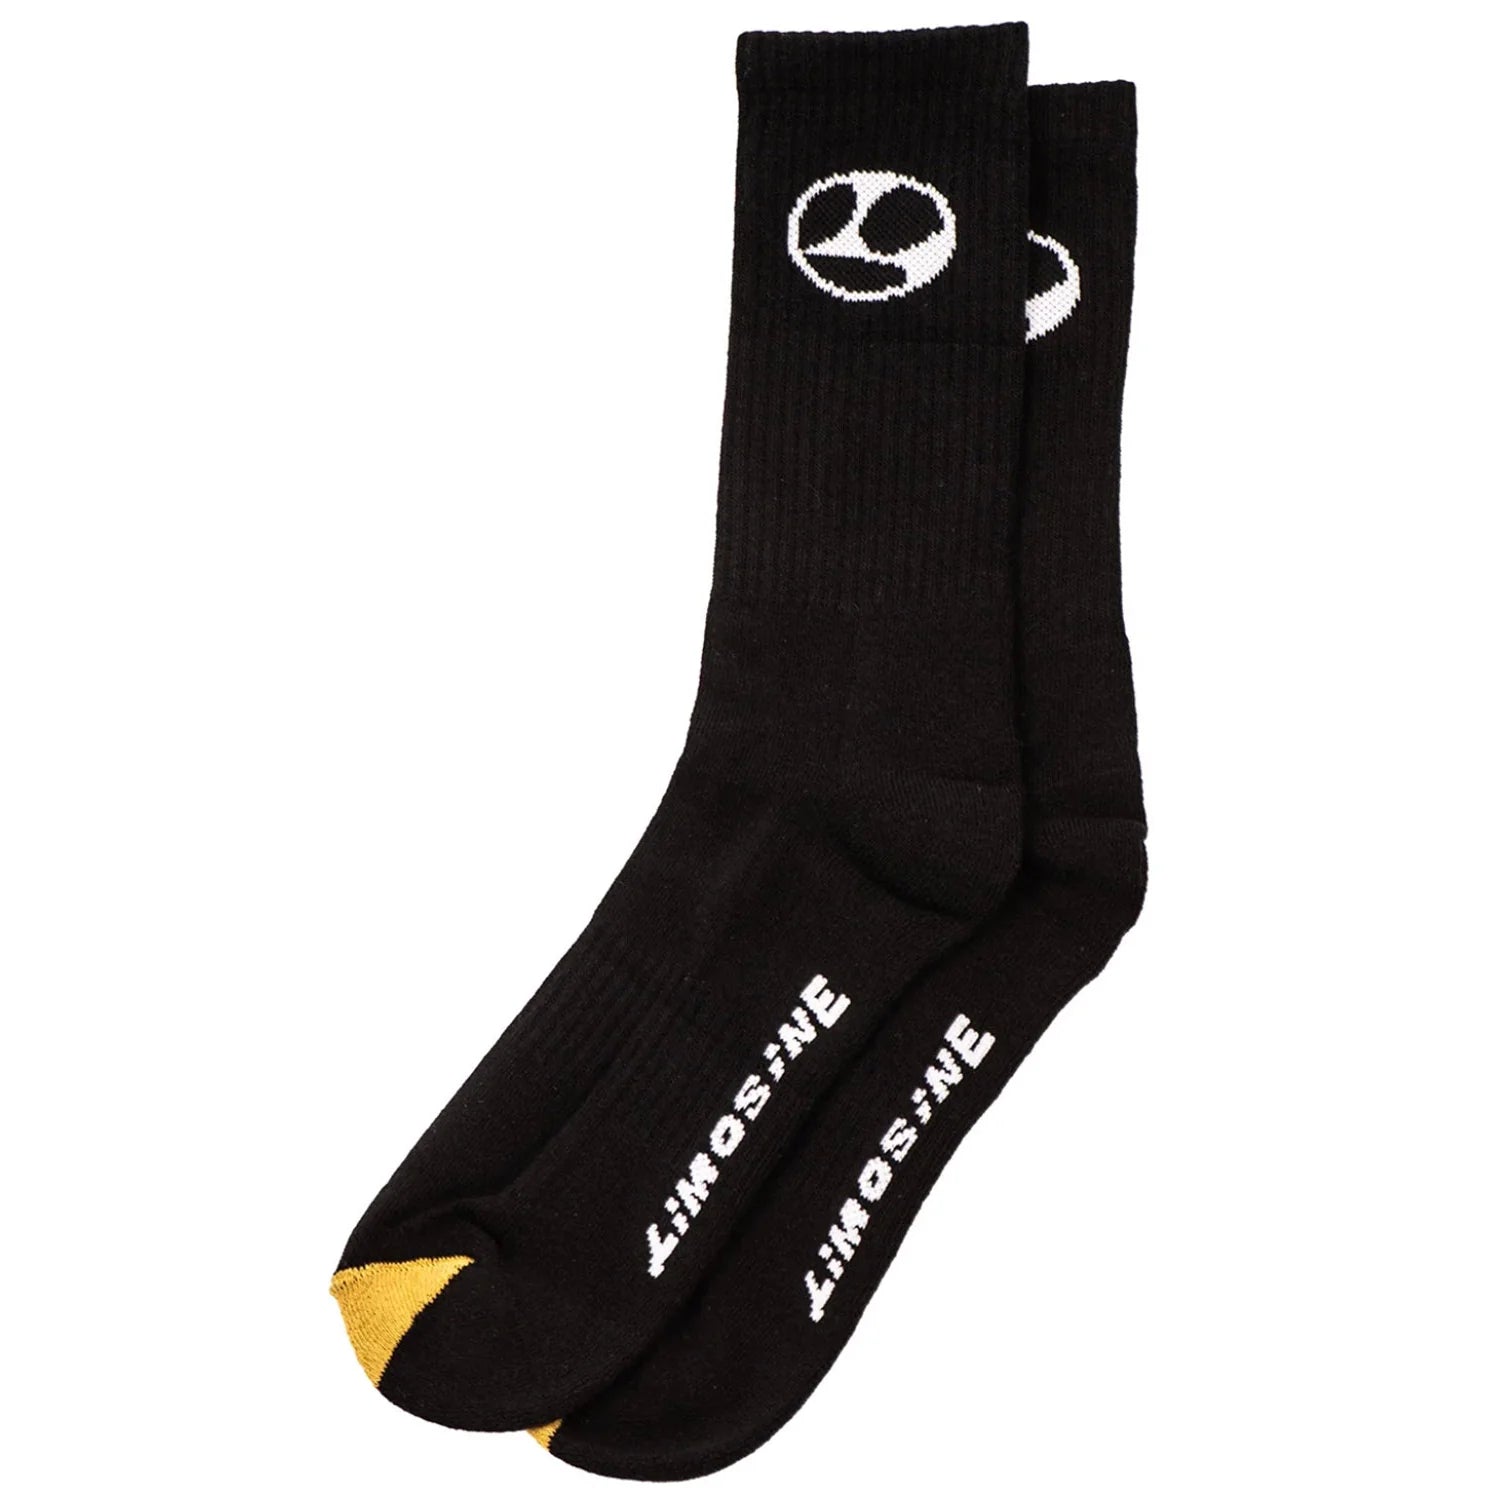 Limosine - Limo Gold Toe Socks - Black